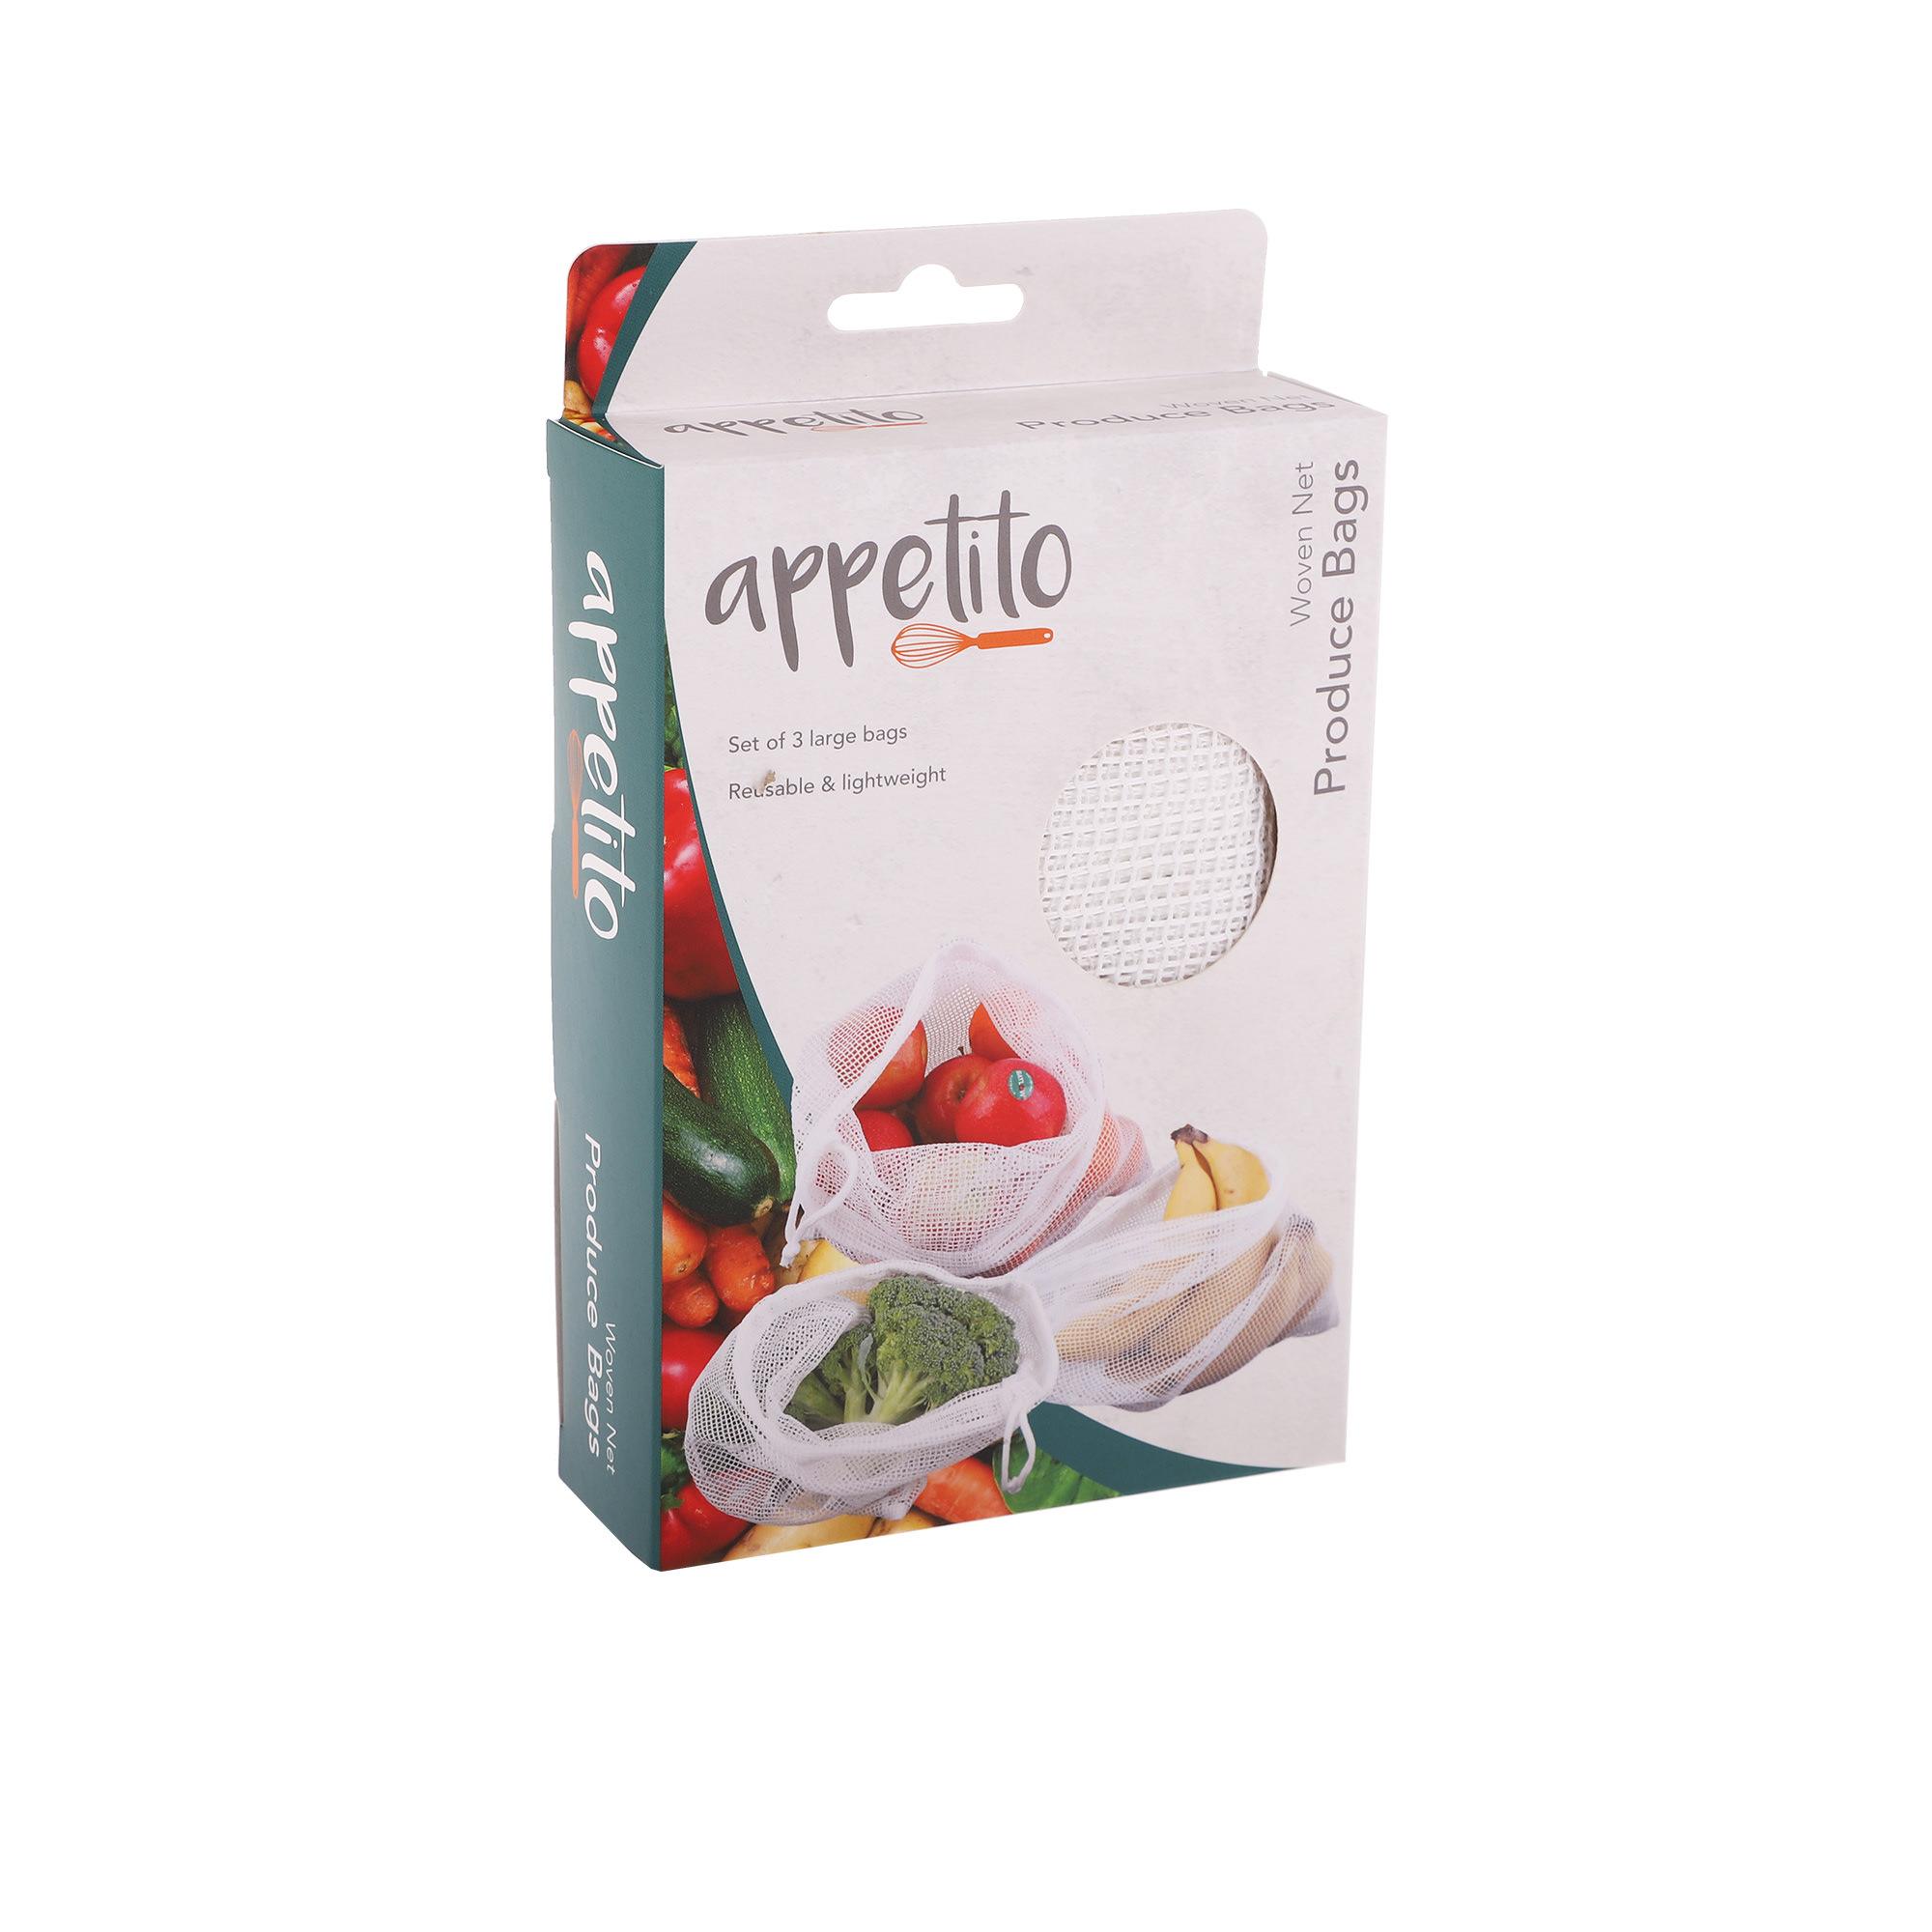 Appetito Woven Net Produce Bag Set of 3 Image 3